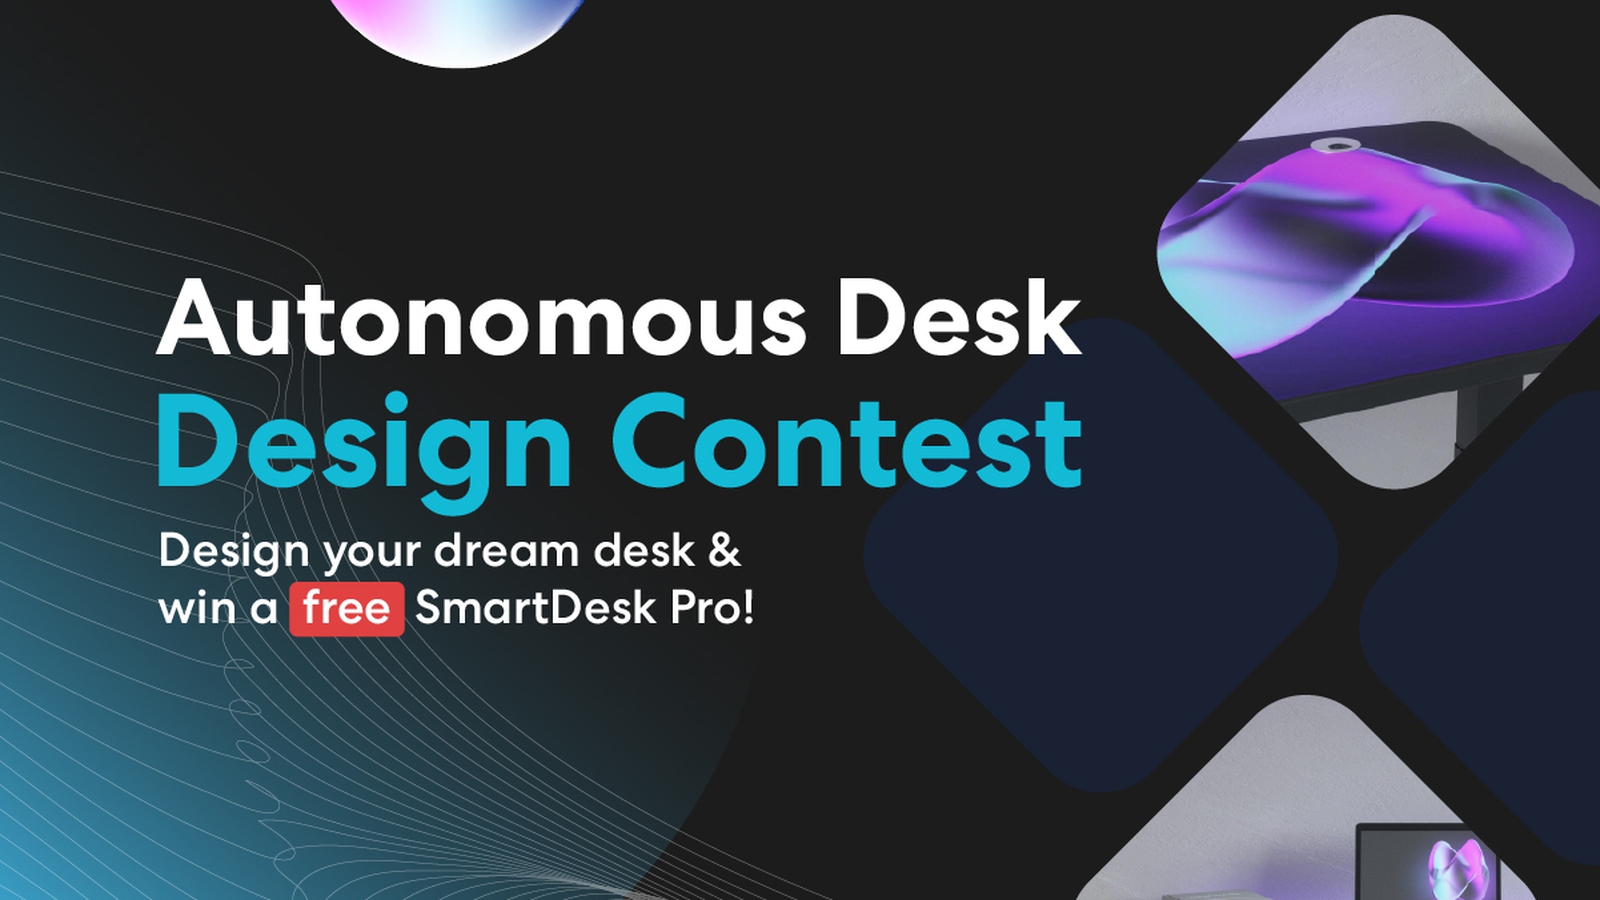 Autonomous Desk Design Contest. Win a free customized SmartDesk Pro! (Terms & Conditions)